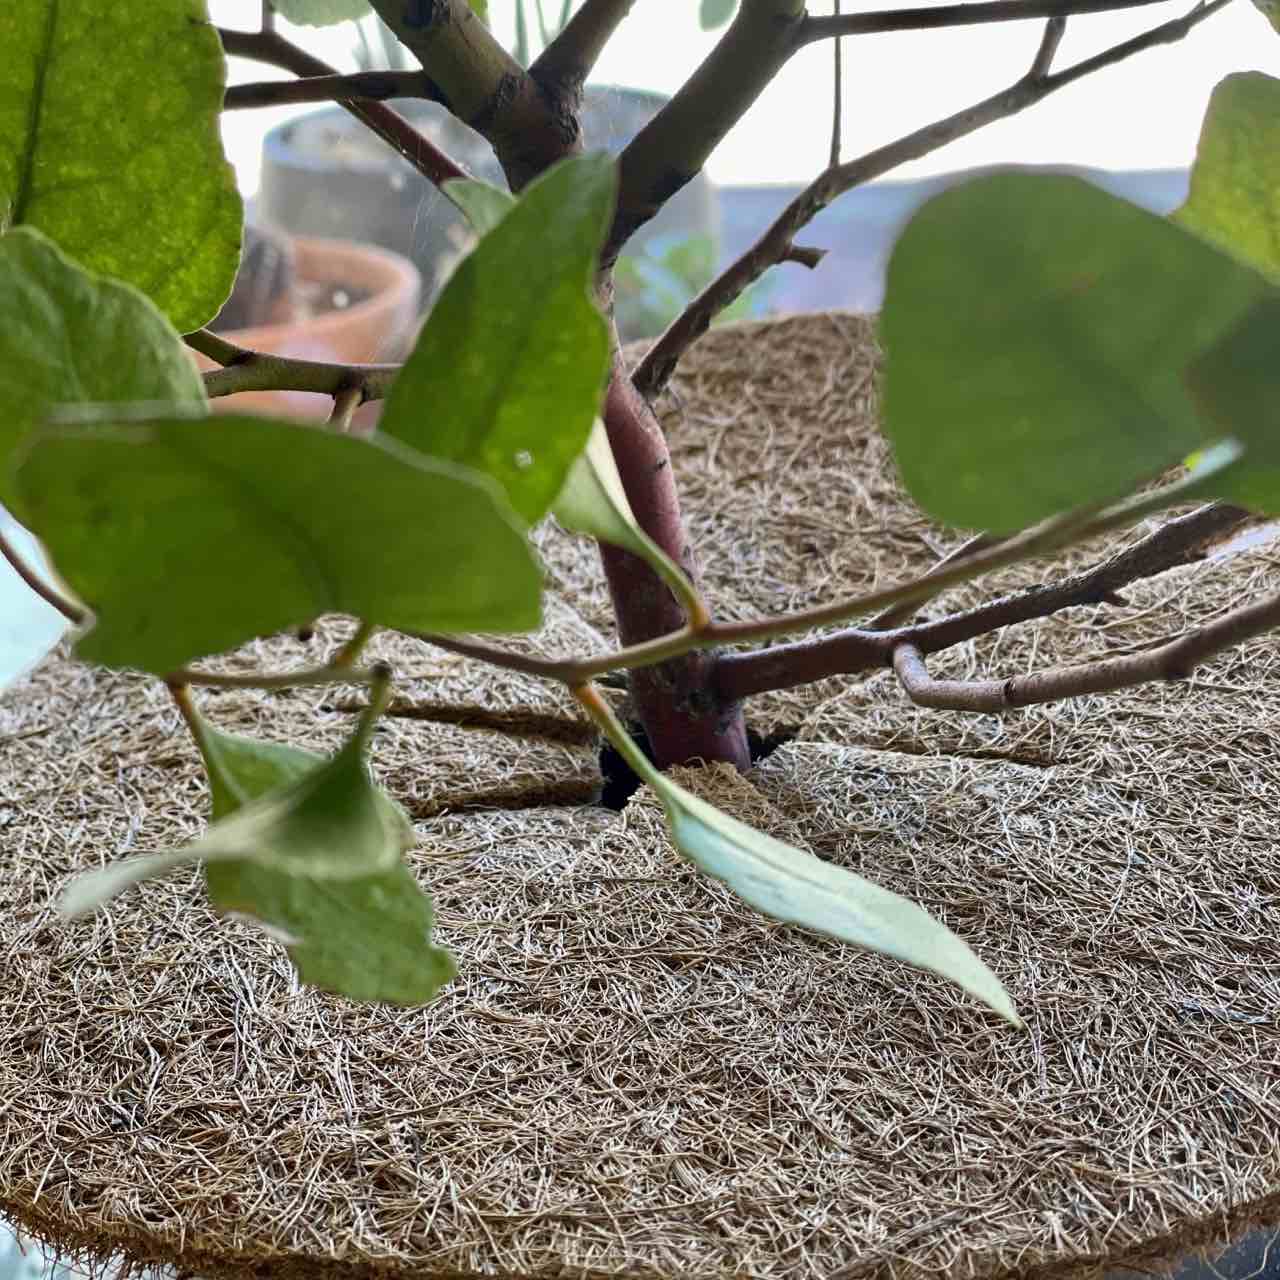 Round Pot Coir Mat Mulch Example around Plant Stem